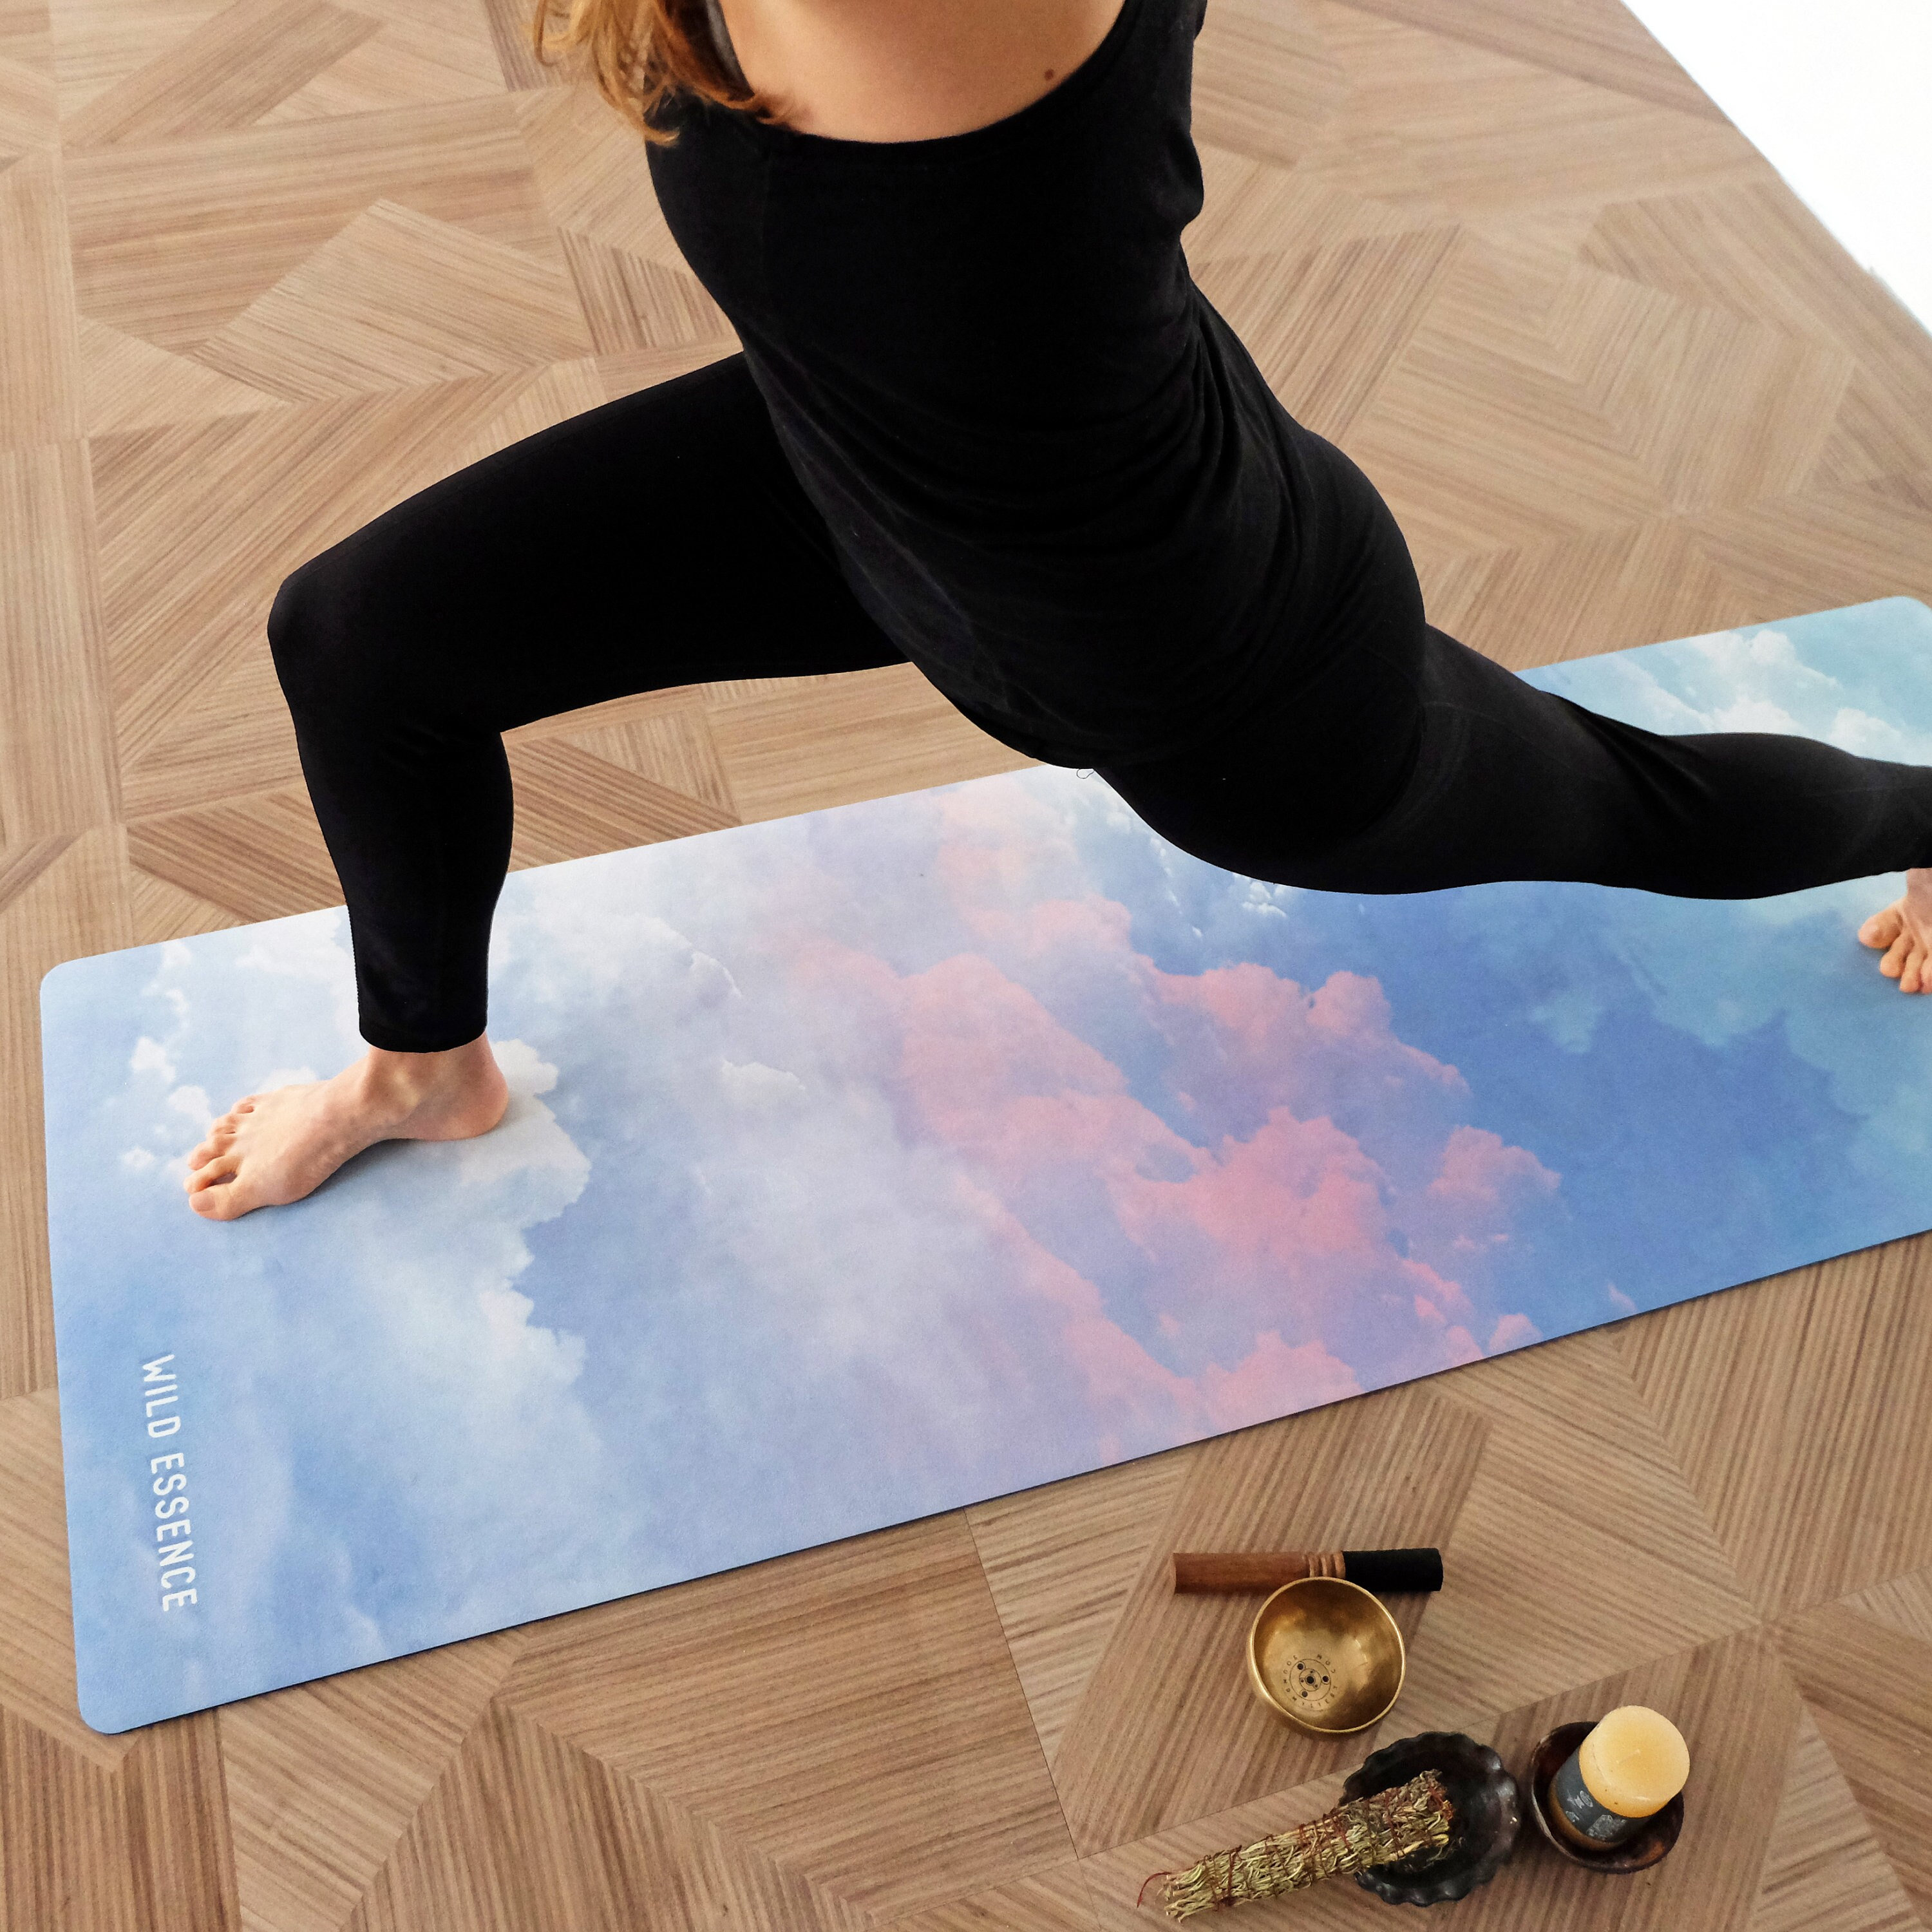 Kaufe Yoga-Decke Anti-Rutsch-Mikrofaser Yoga-Matten-Abdeckung